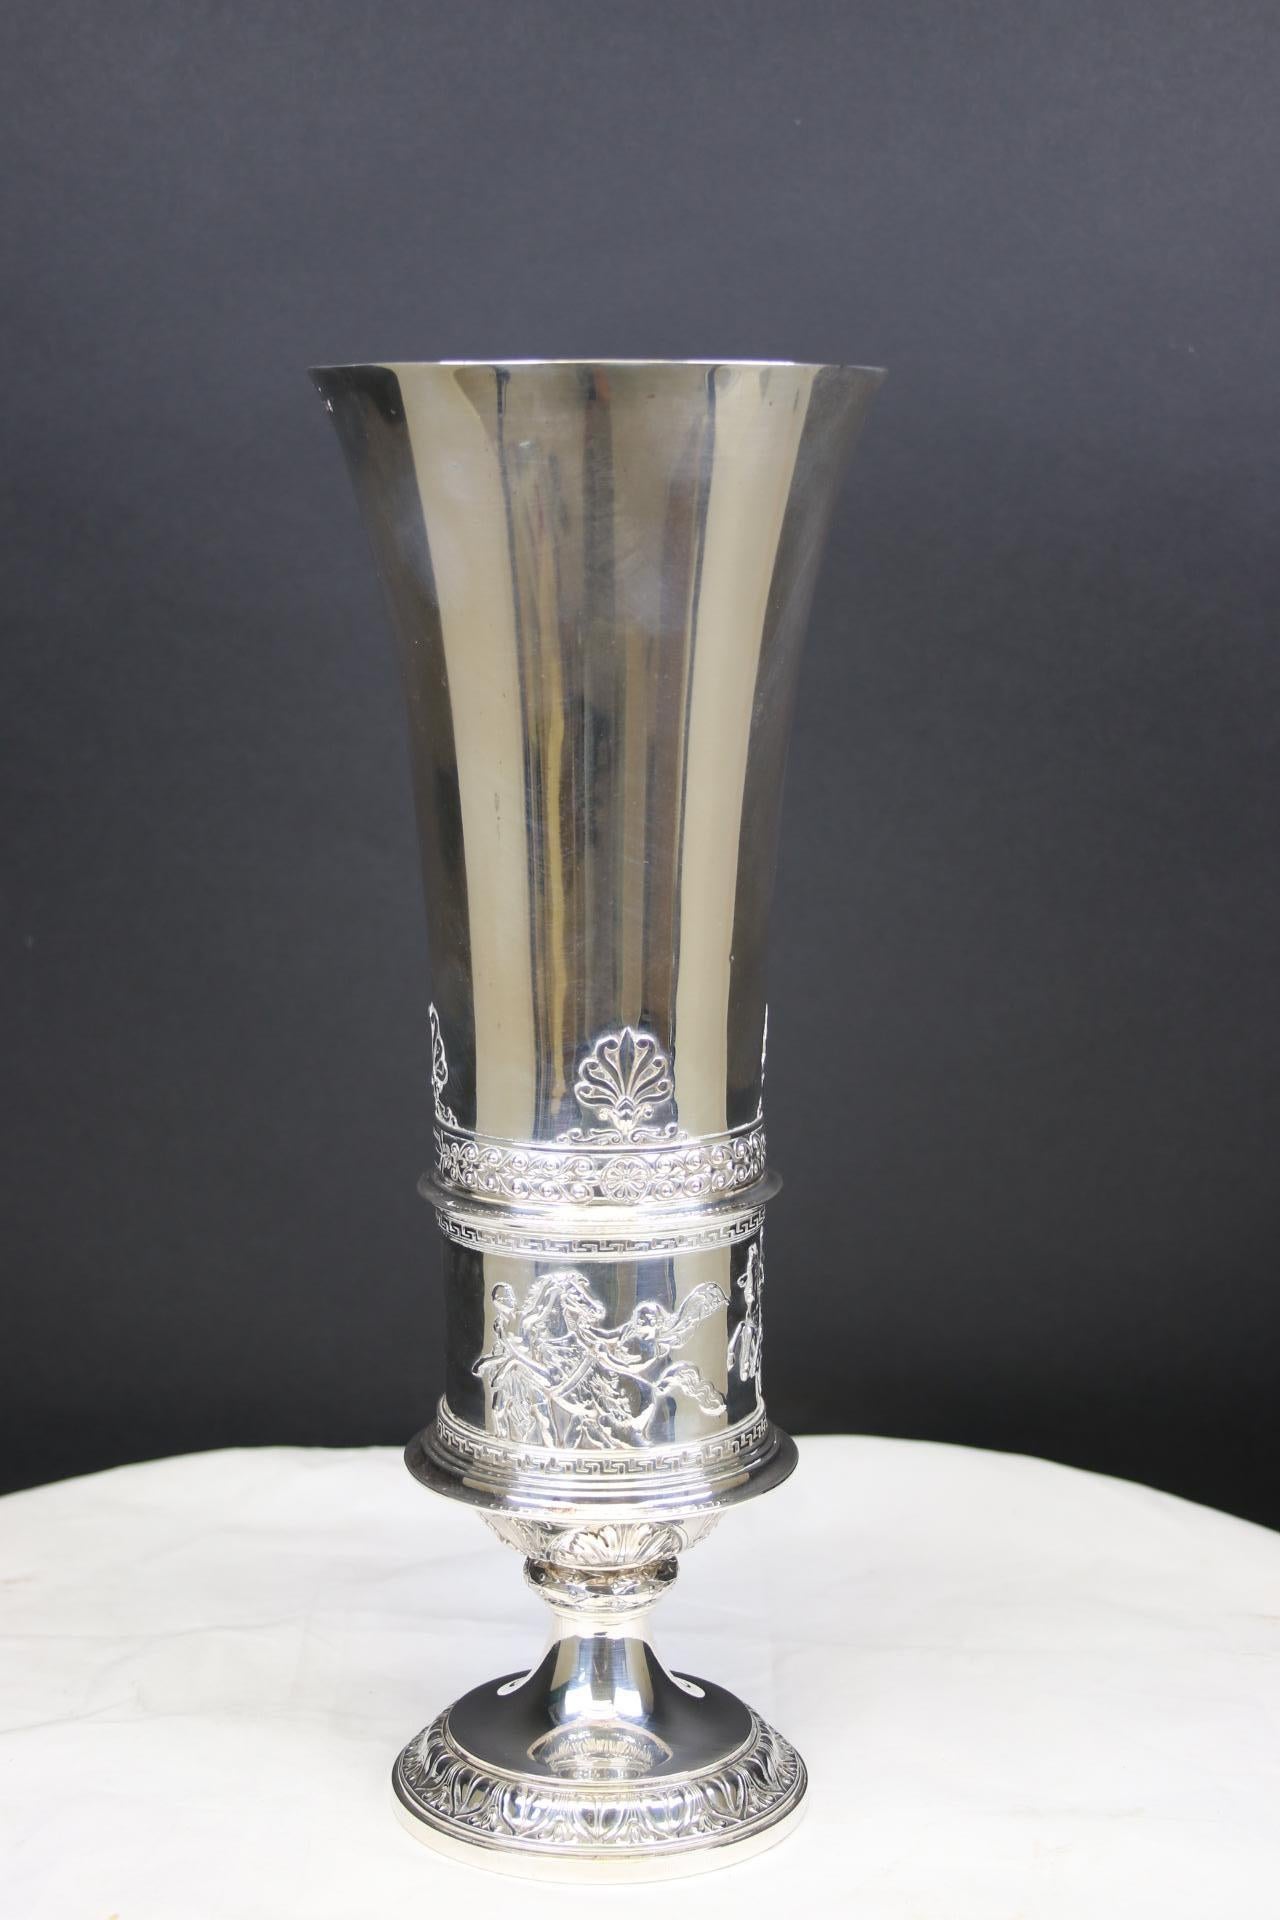 A beautiful Silver Goblet made in Vienna around 1860 by Josef Carl Klinkosch (1822-1888). 

Josef Carl Ritter von Klinkosch was a well-known Viennese silversmith and purveyor to the court. Klinkosch refined the style of the goods produced at the